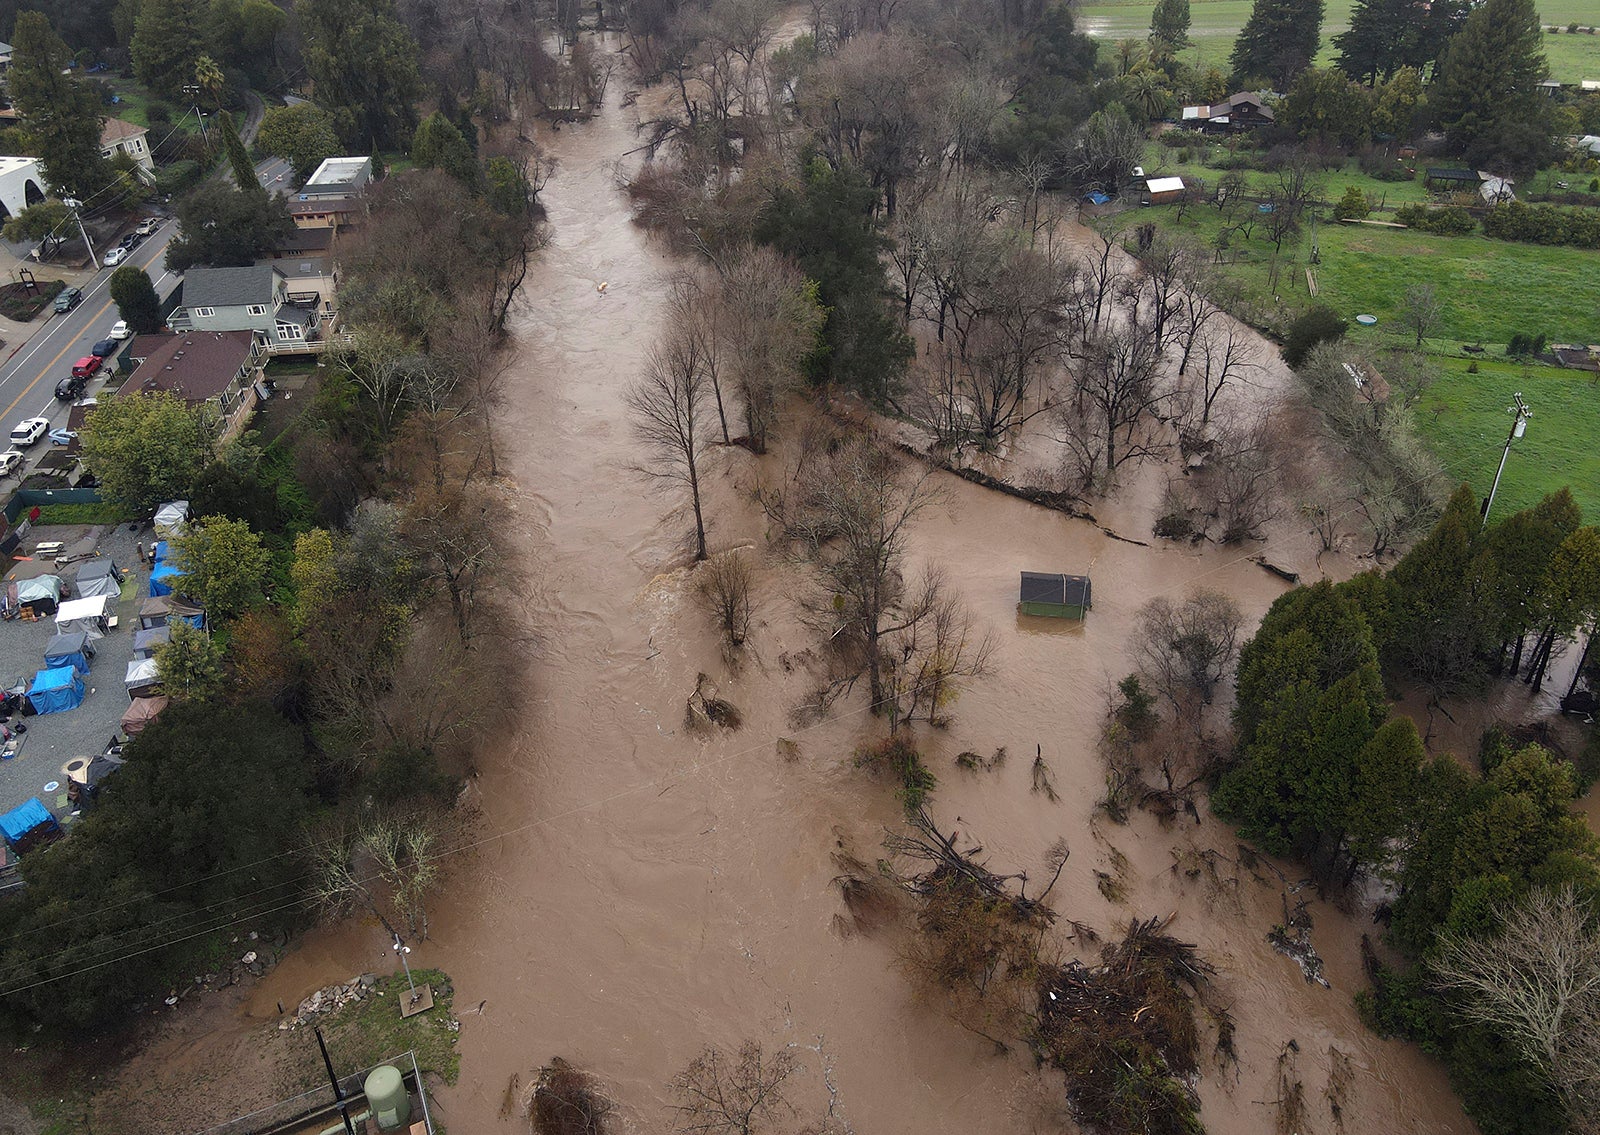 Heavy rains put Felton Grove, California, under feet of water